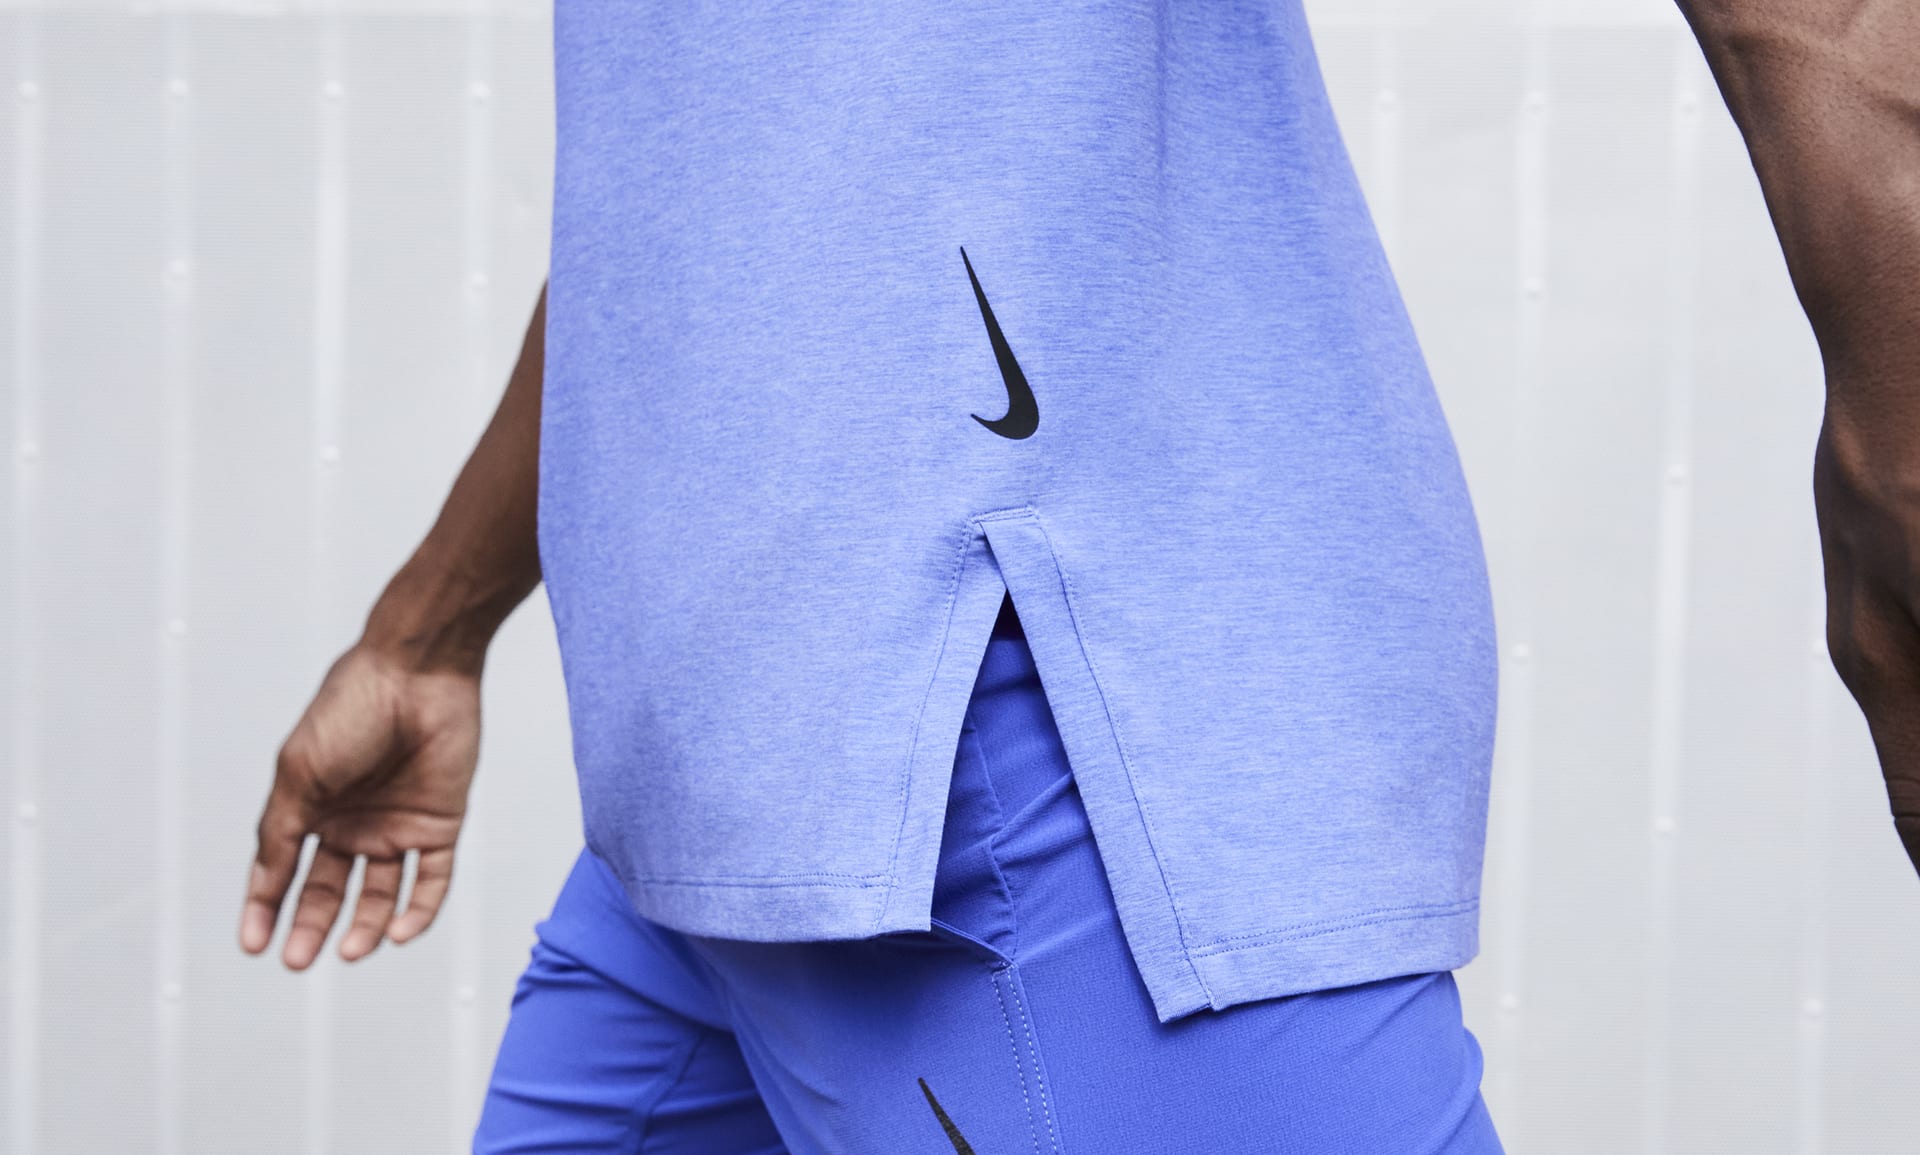 Nike Yoga Peace Through Practice T-Shirt Black - Penloe